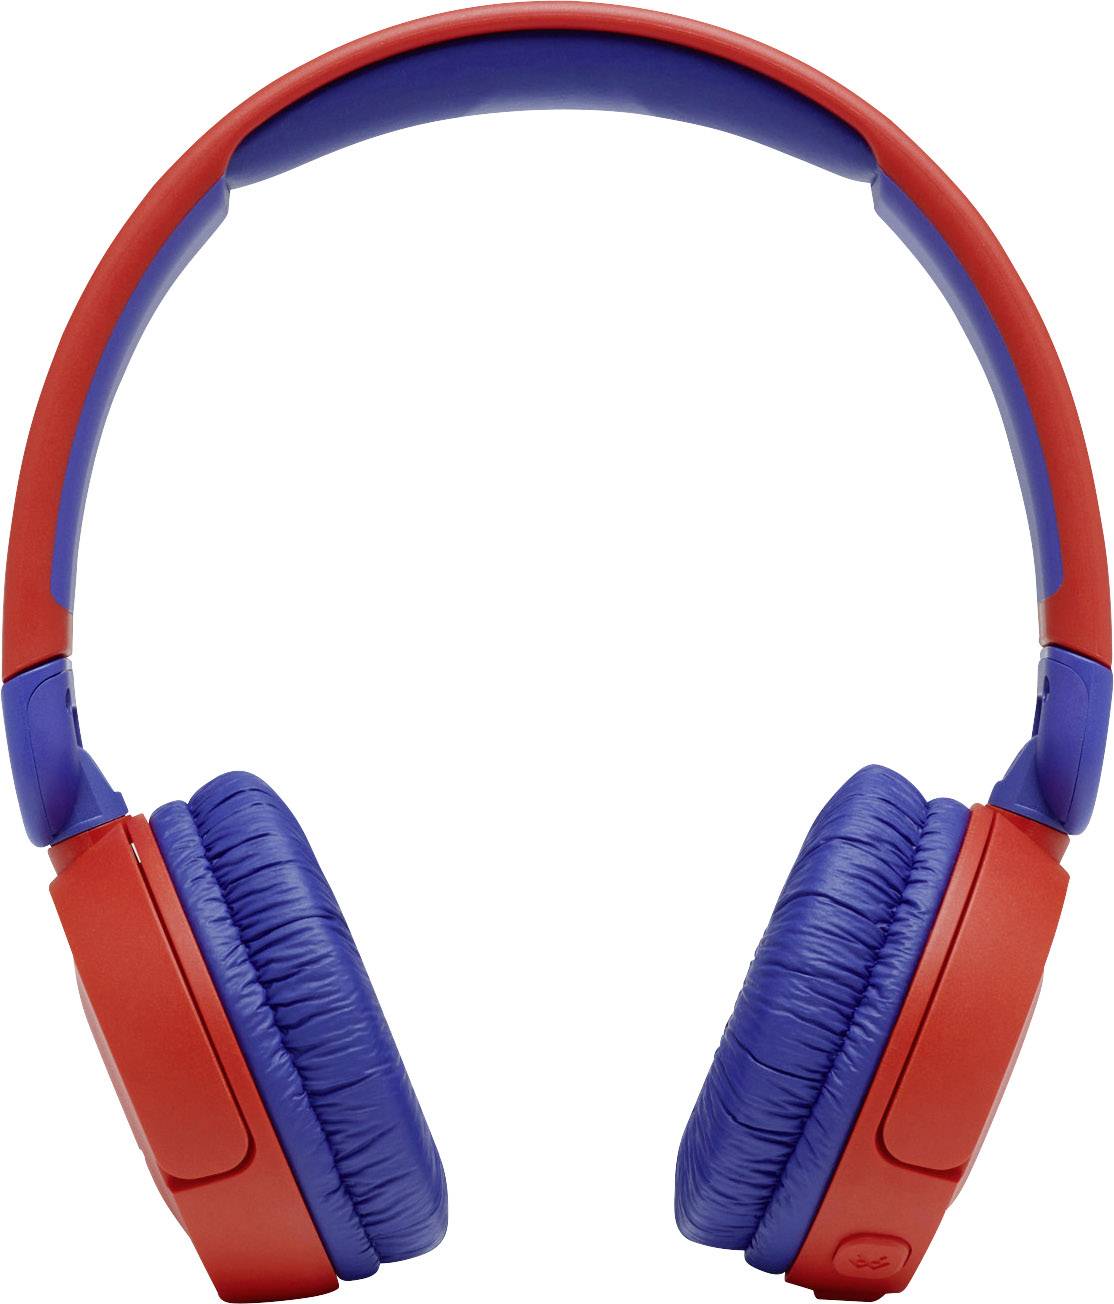 JBL JR 310 BT On-ear headphones Foldable, limiter, Volume control Red, Blue | Conrad.com